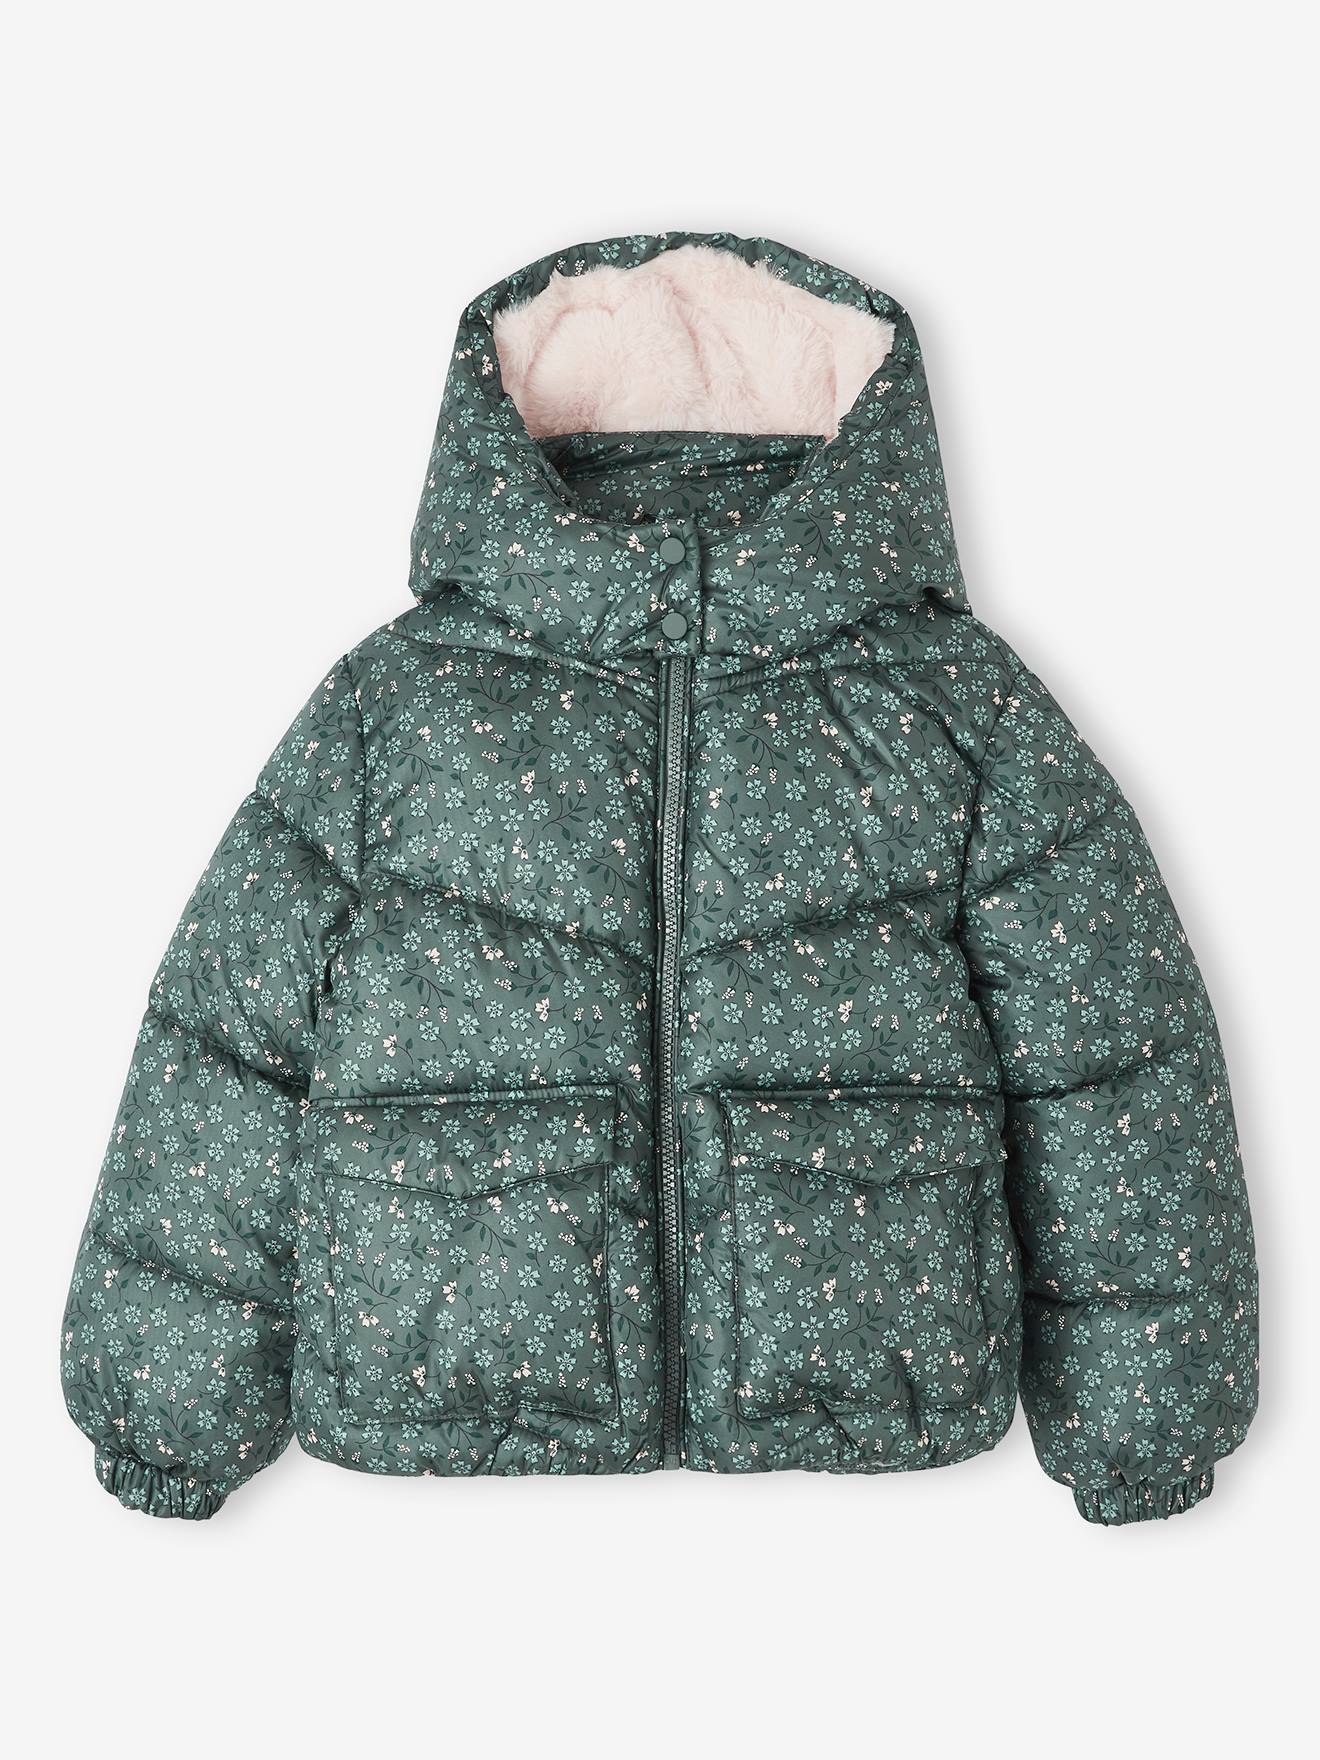 Printed Jacket with Hood & Polar Fleece Lining for Girls printed green